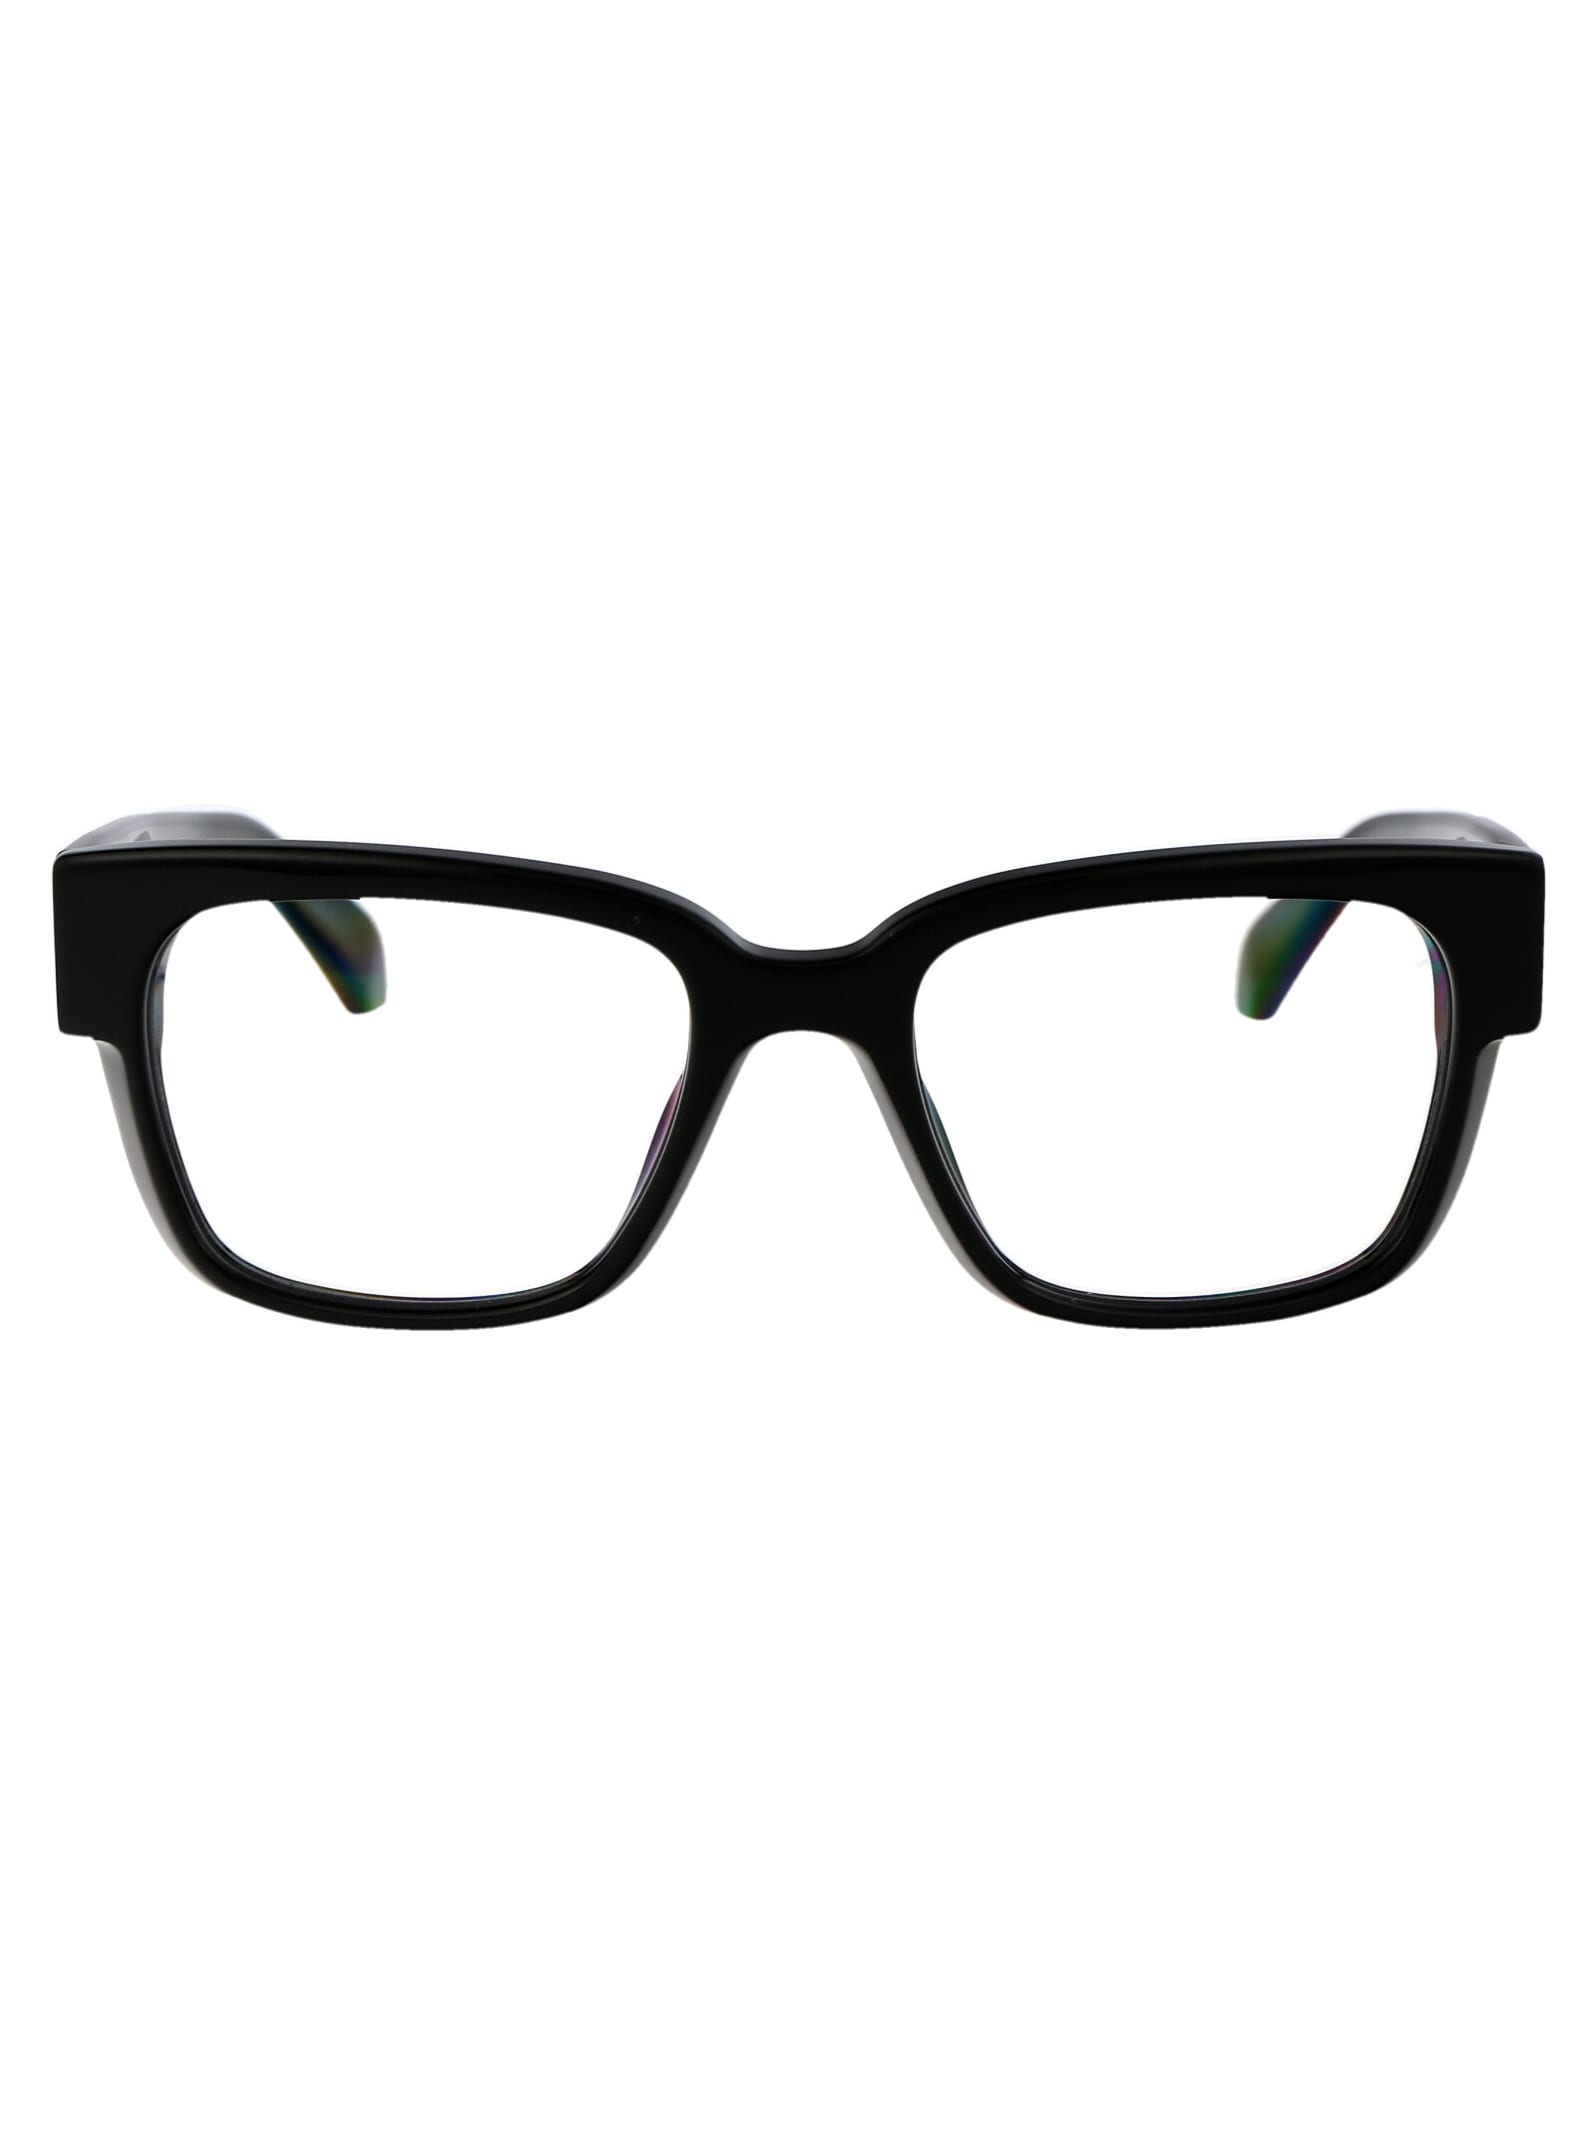 Optical Style 59 Glasses